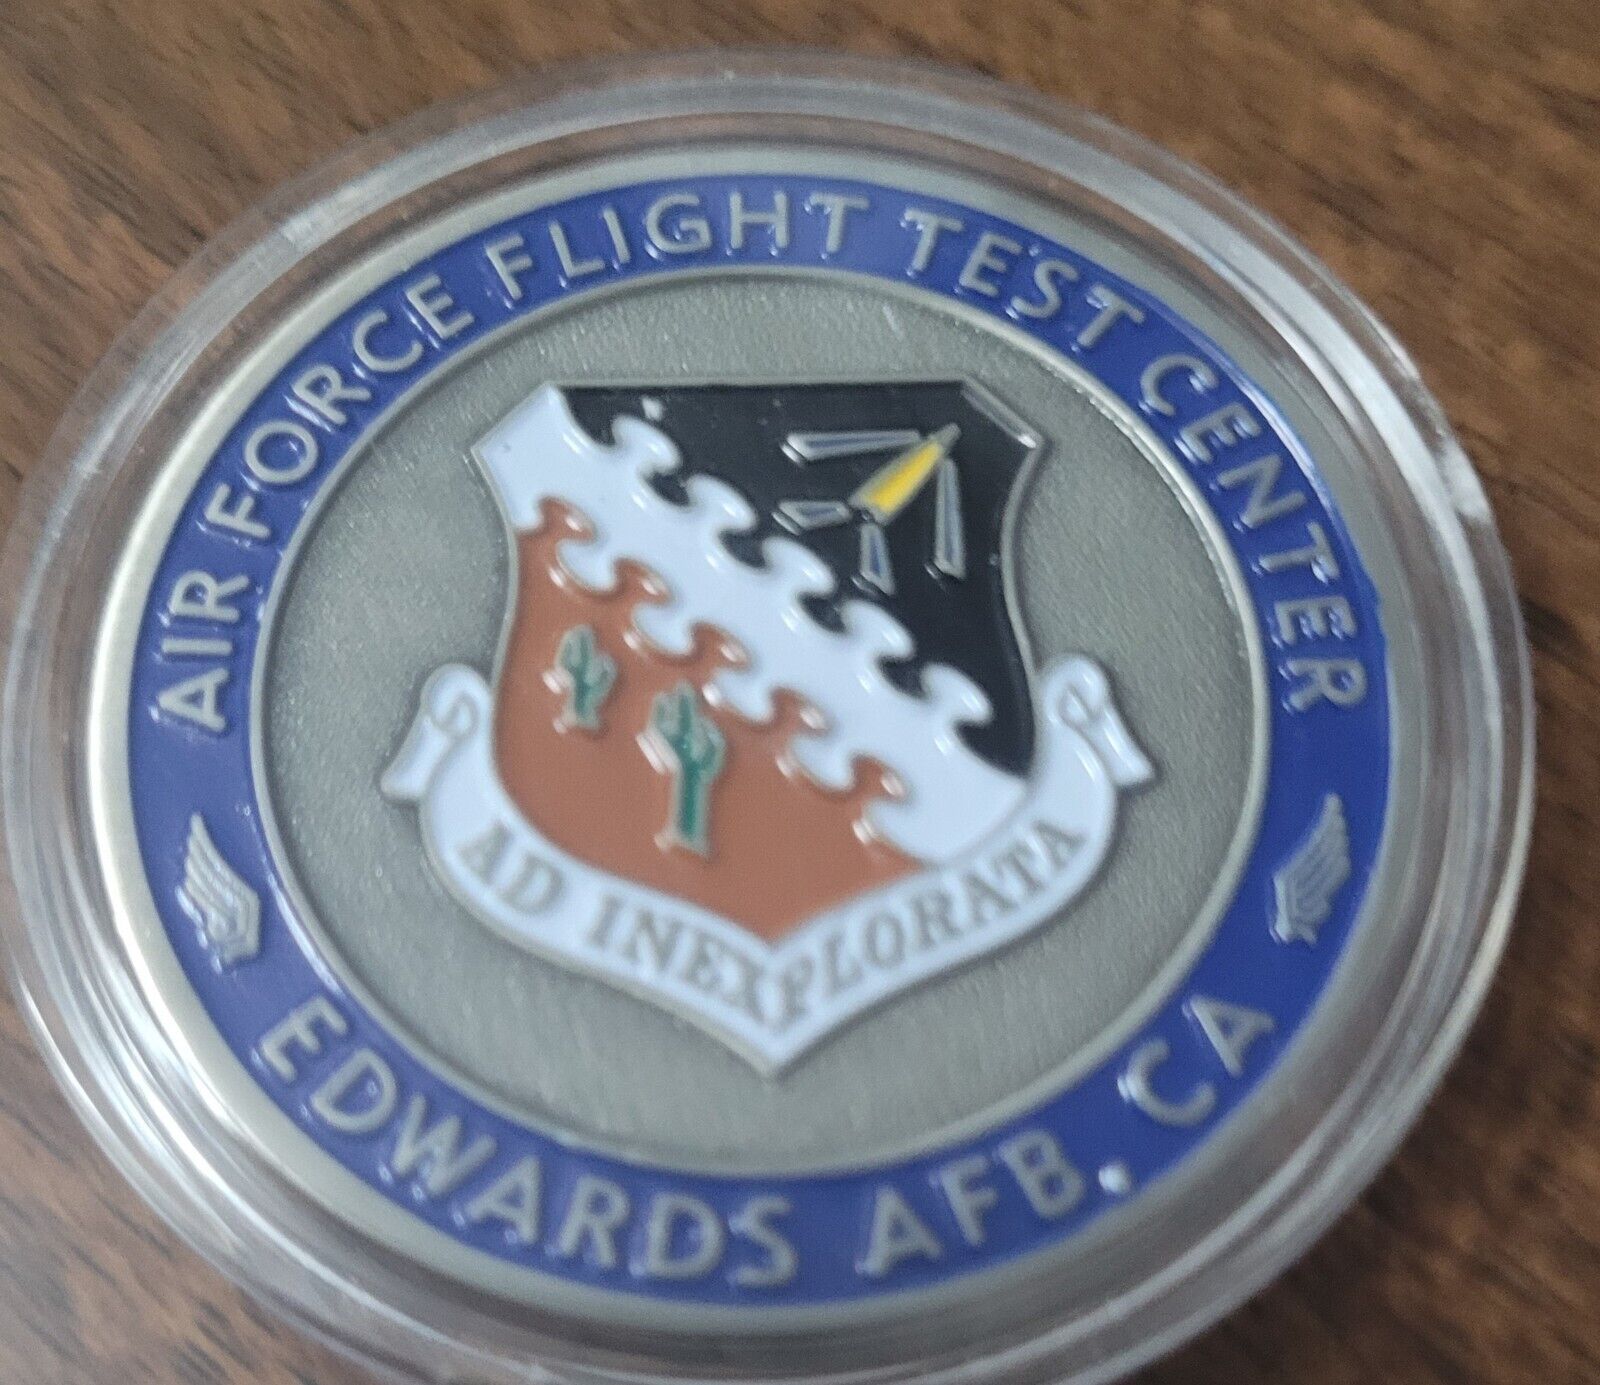 EDWARDS AIR FORCE BASE FLIGHT TEST CENTER CHALLENGE COIN